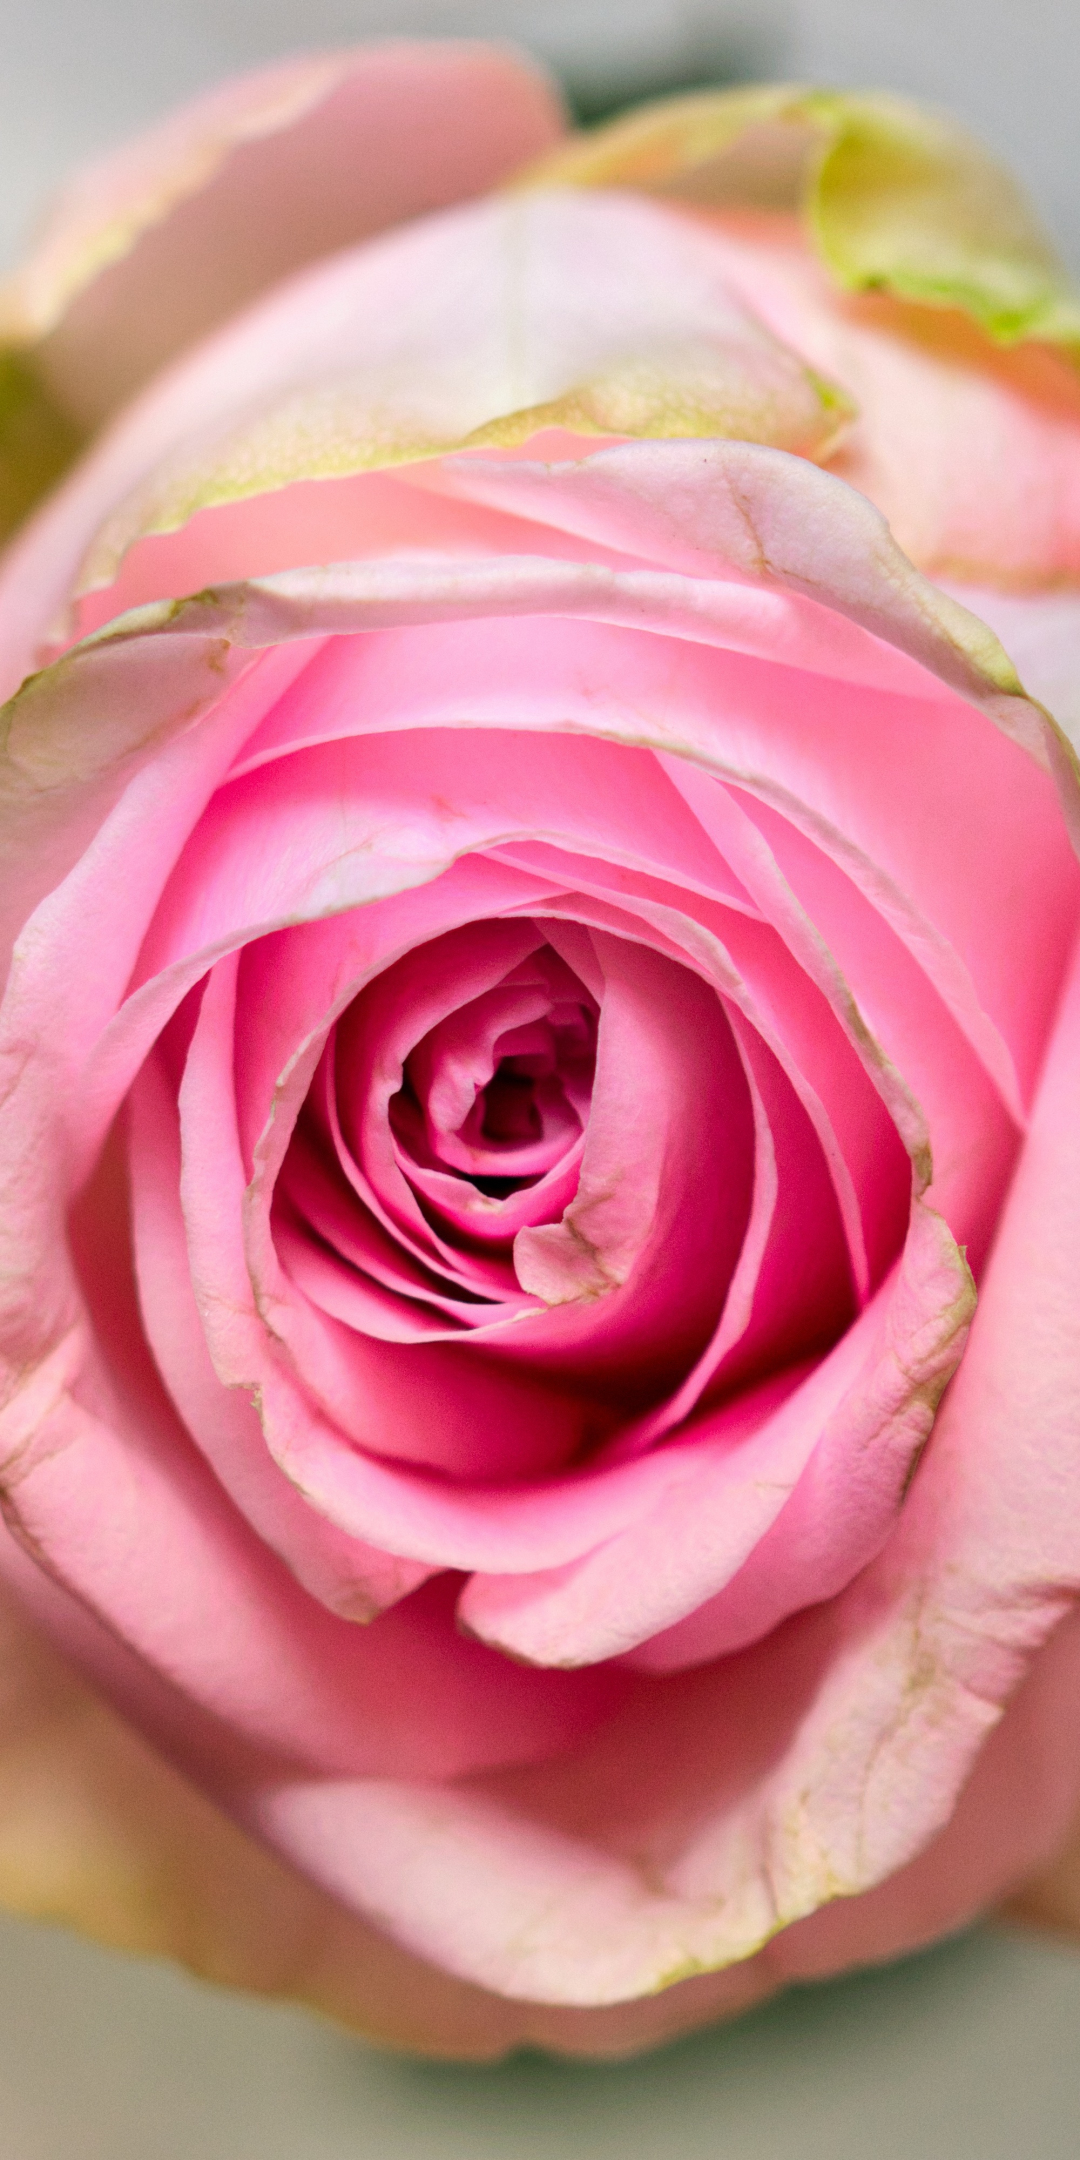 Download wallpaper 1080x2160 pink rose, fresh, close up, honor 7x ...